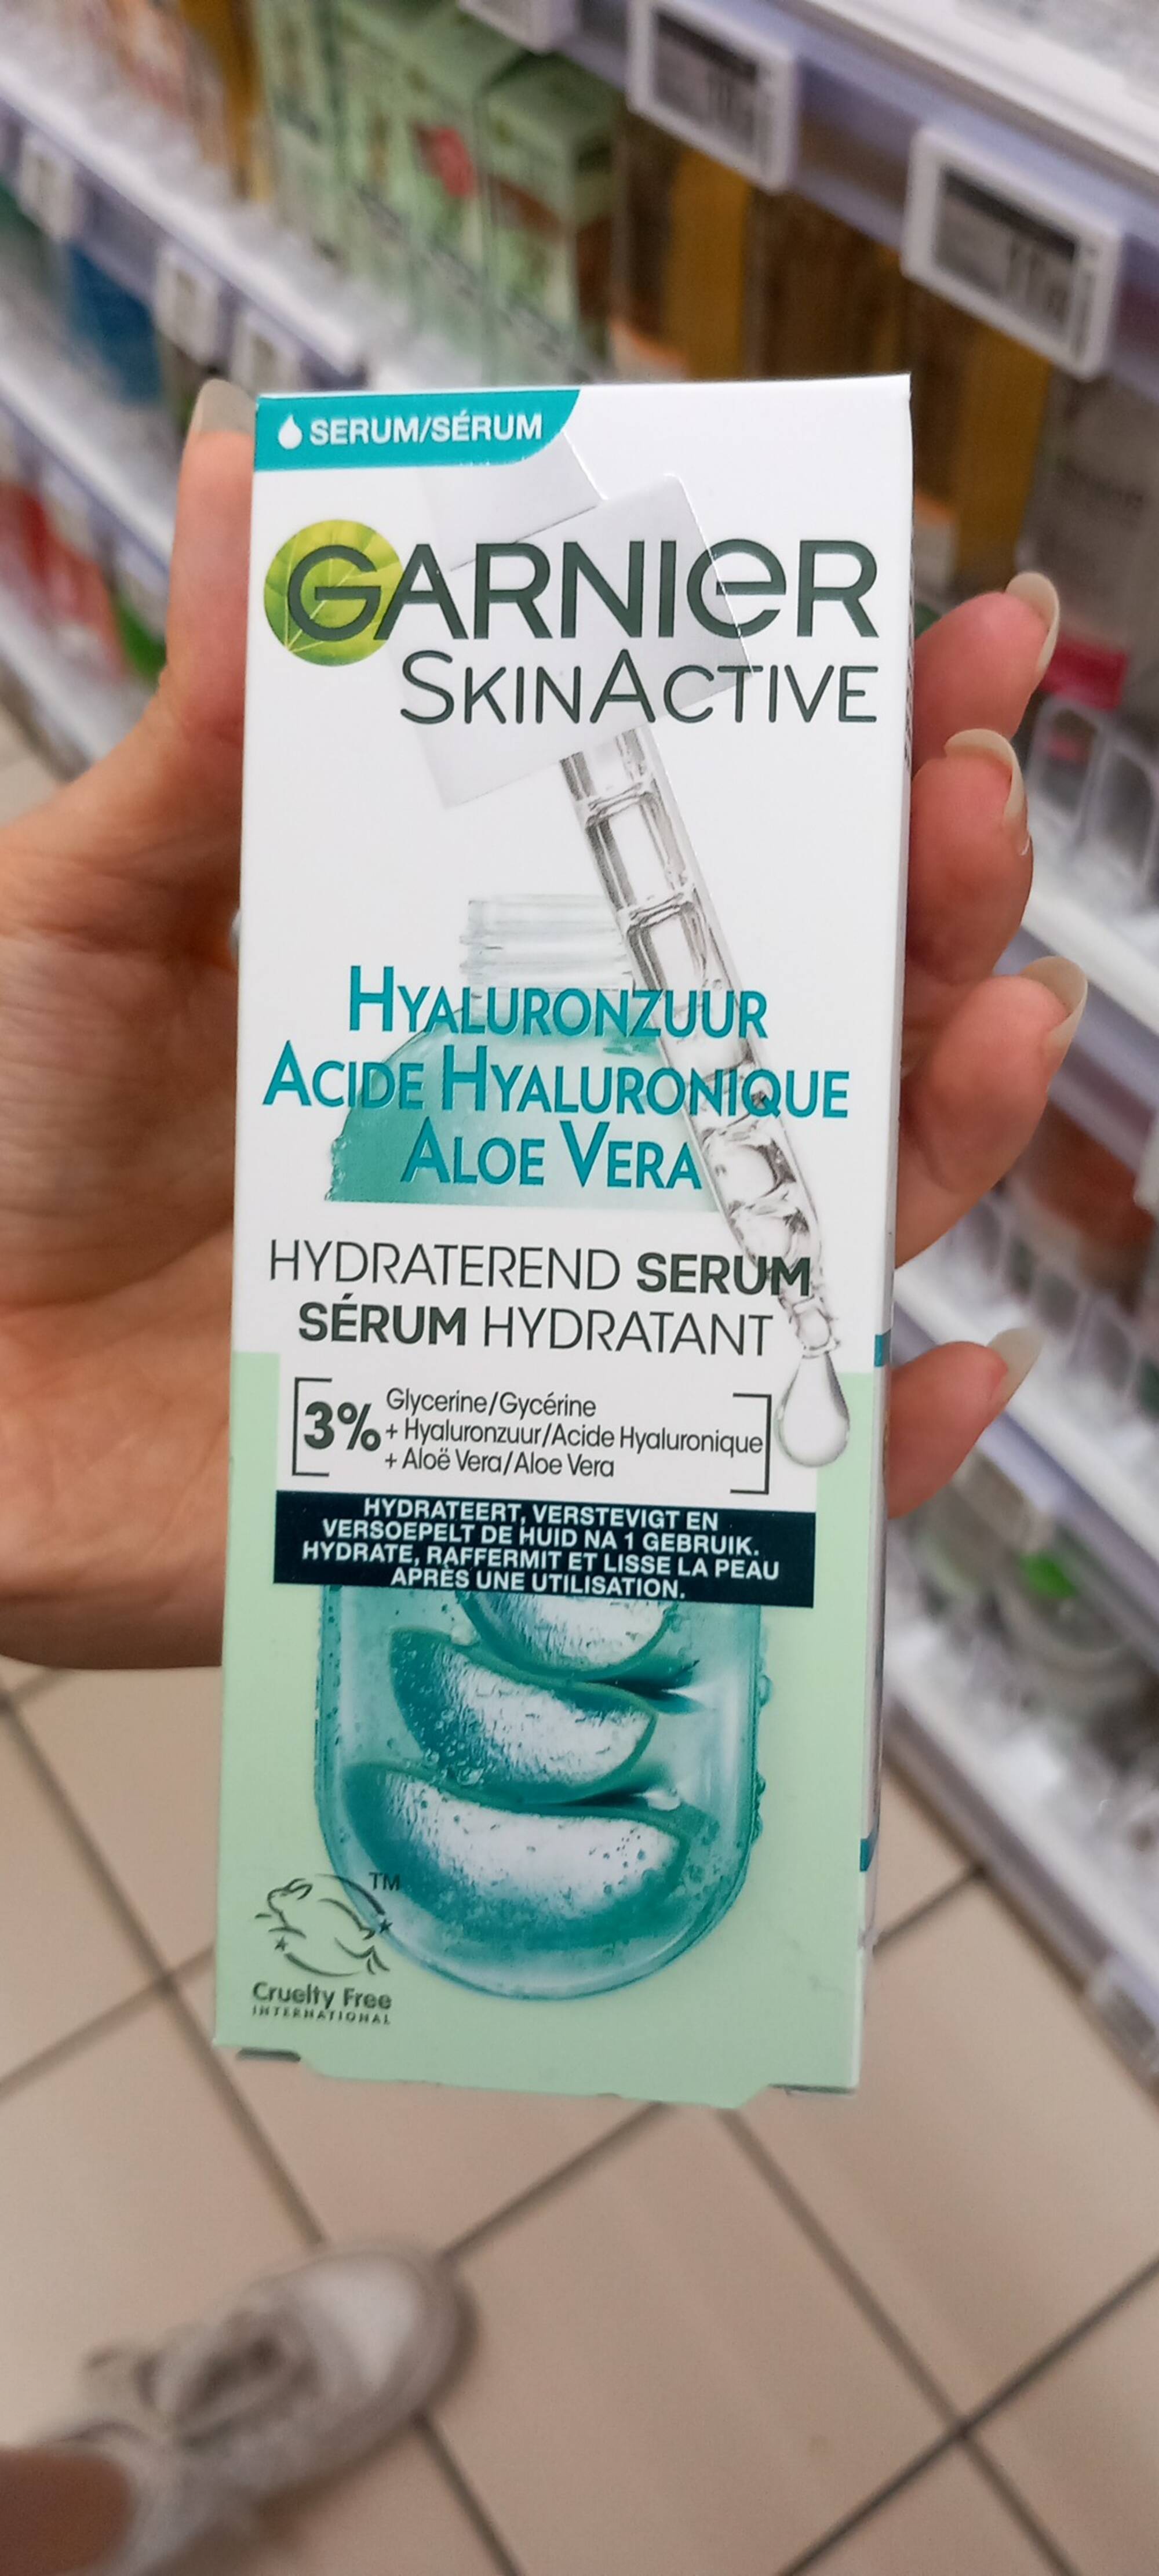 GARNIER - SkinActive - Acide hyaluronique aloe vera sérum hydratant